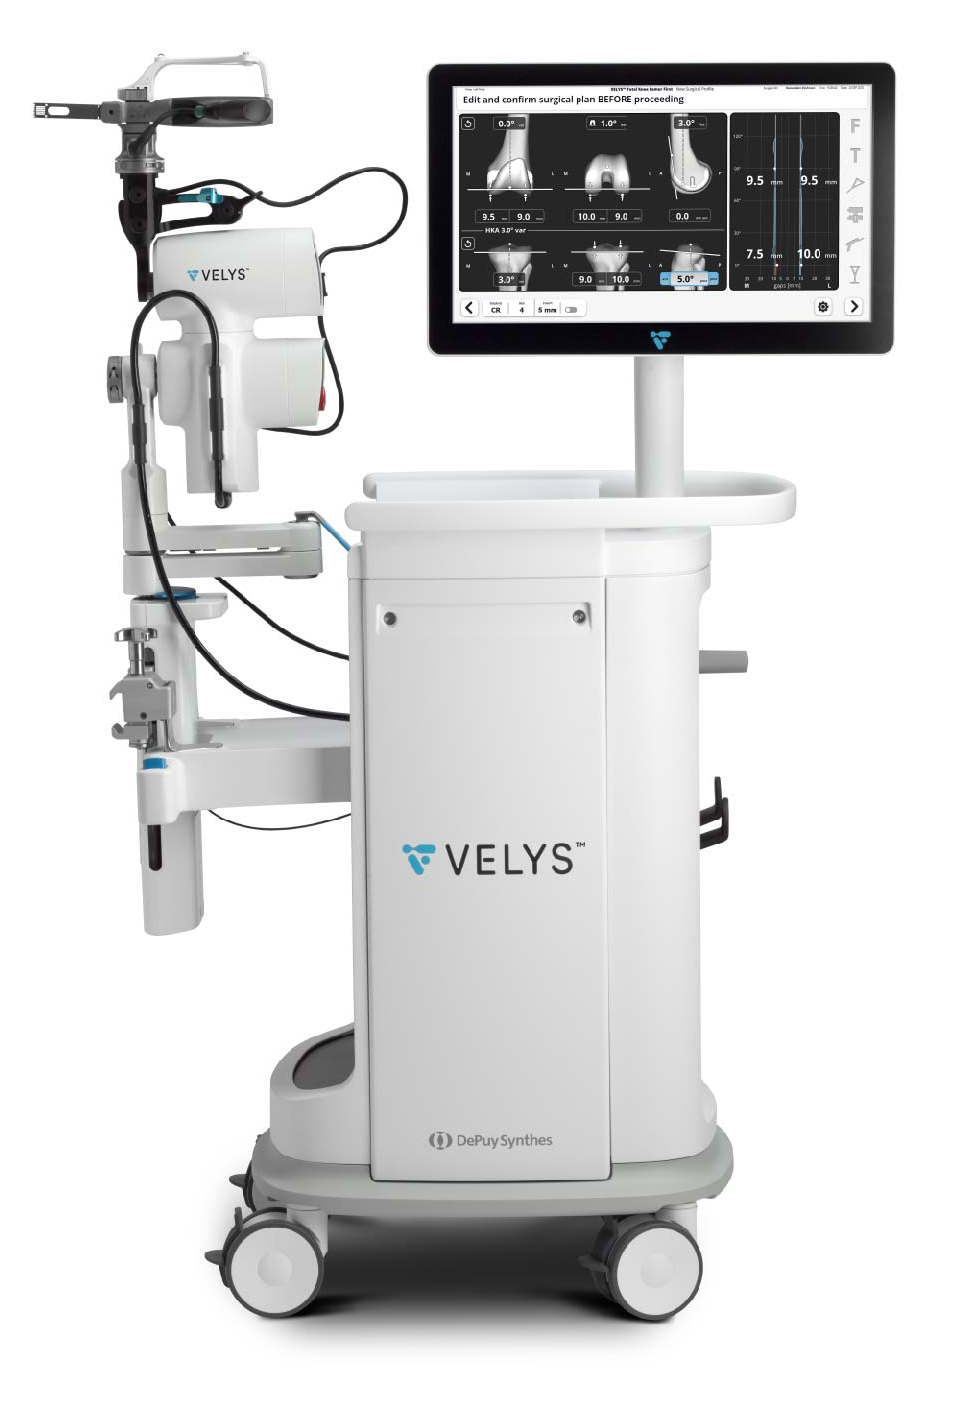 Photo of Velys medical device